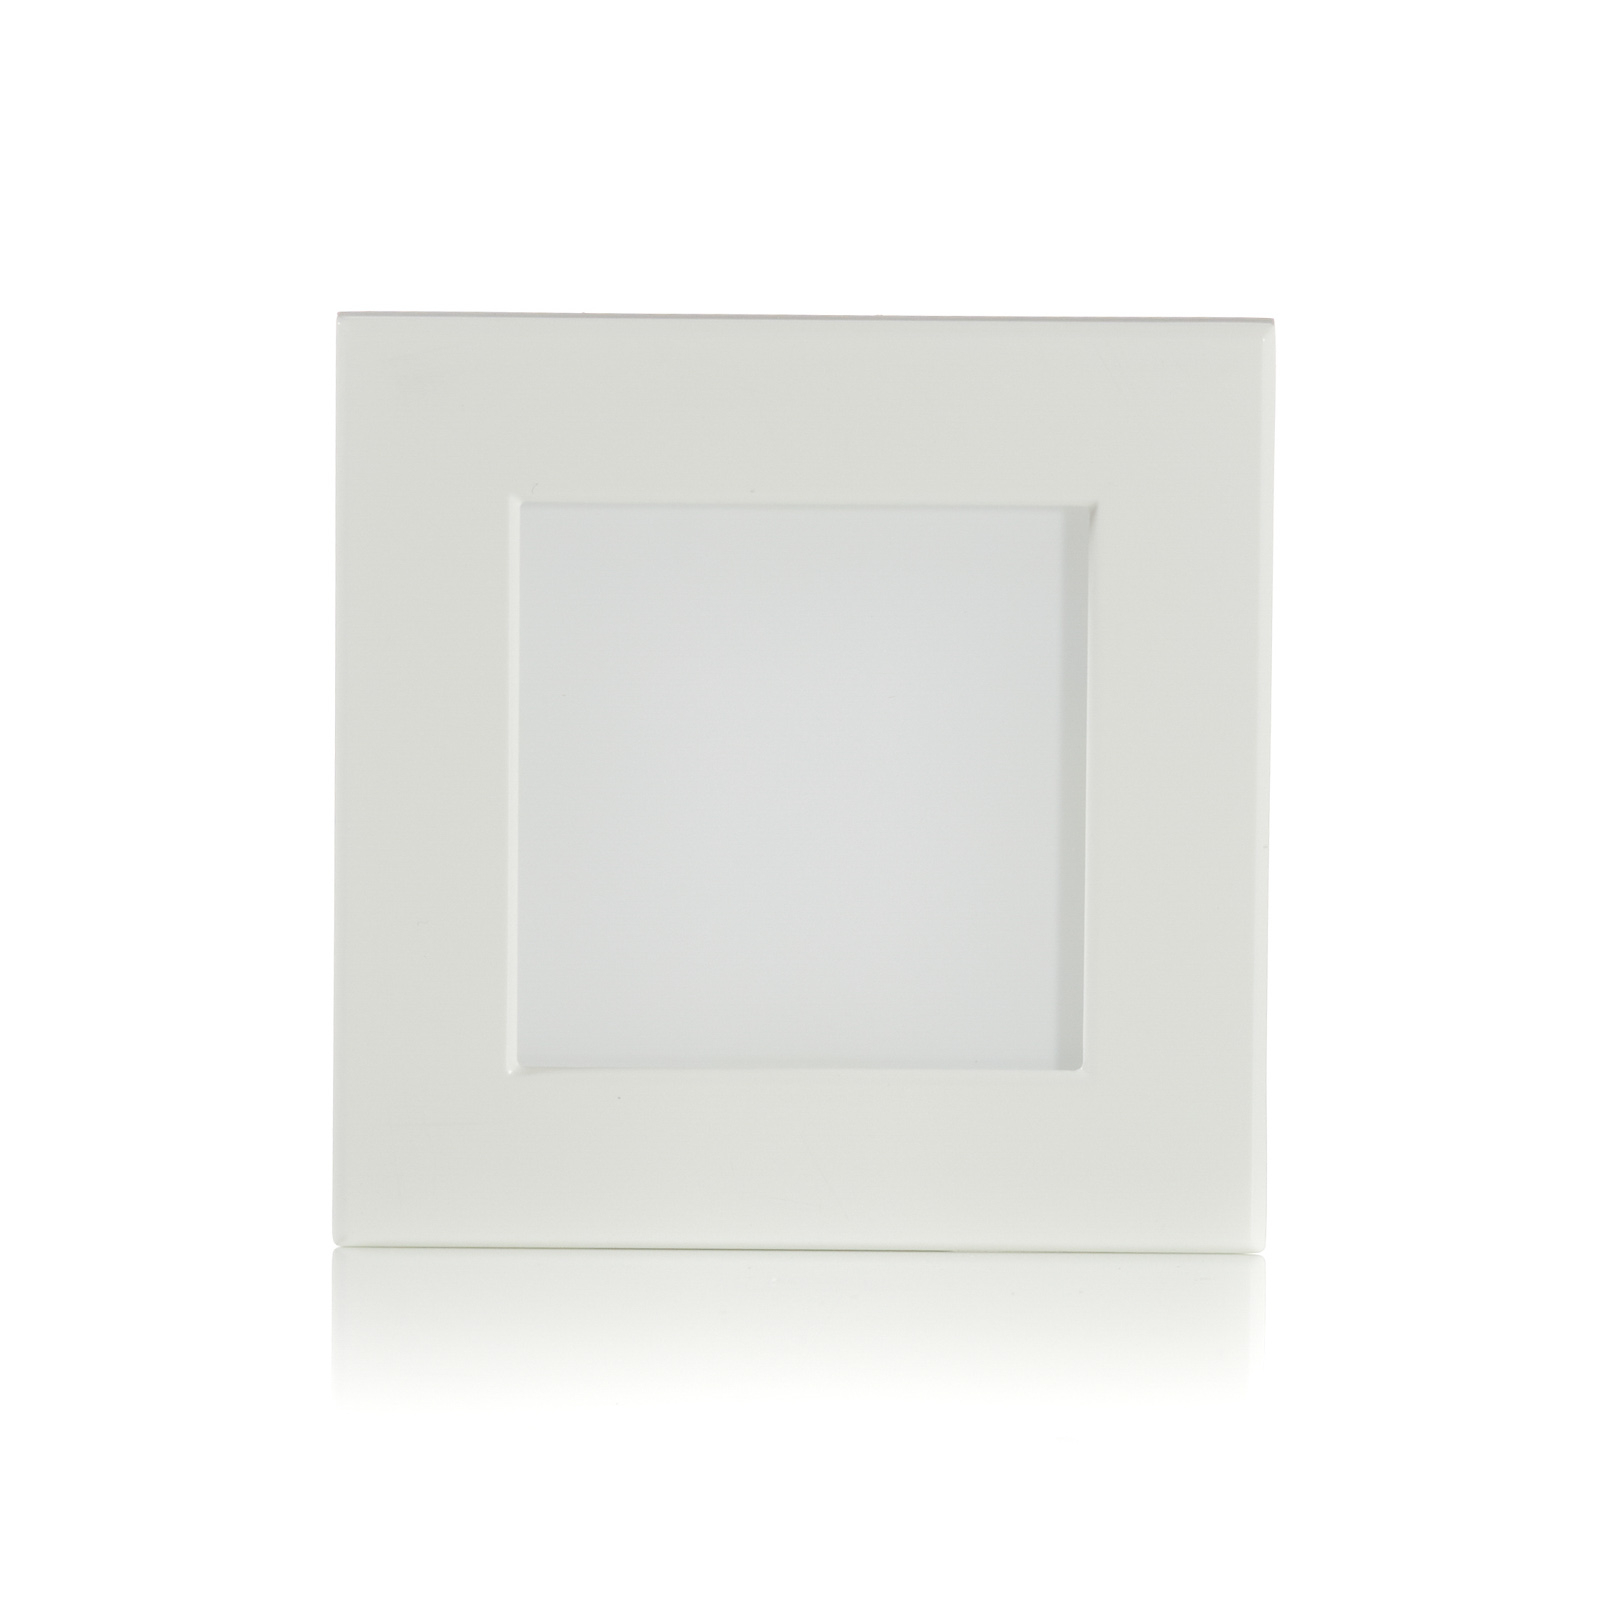 BEGA Accenta wall lamp angular frame white 160 lm